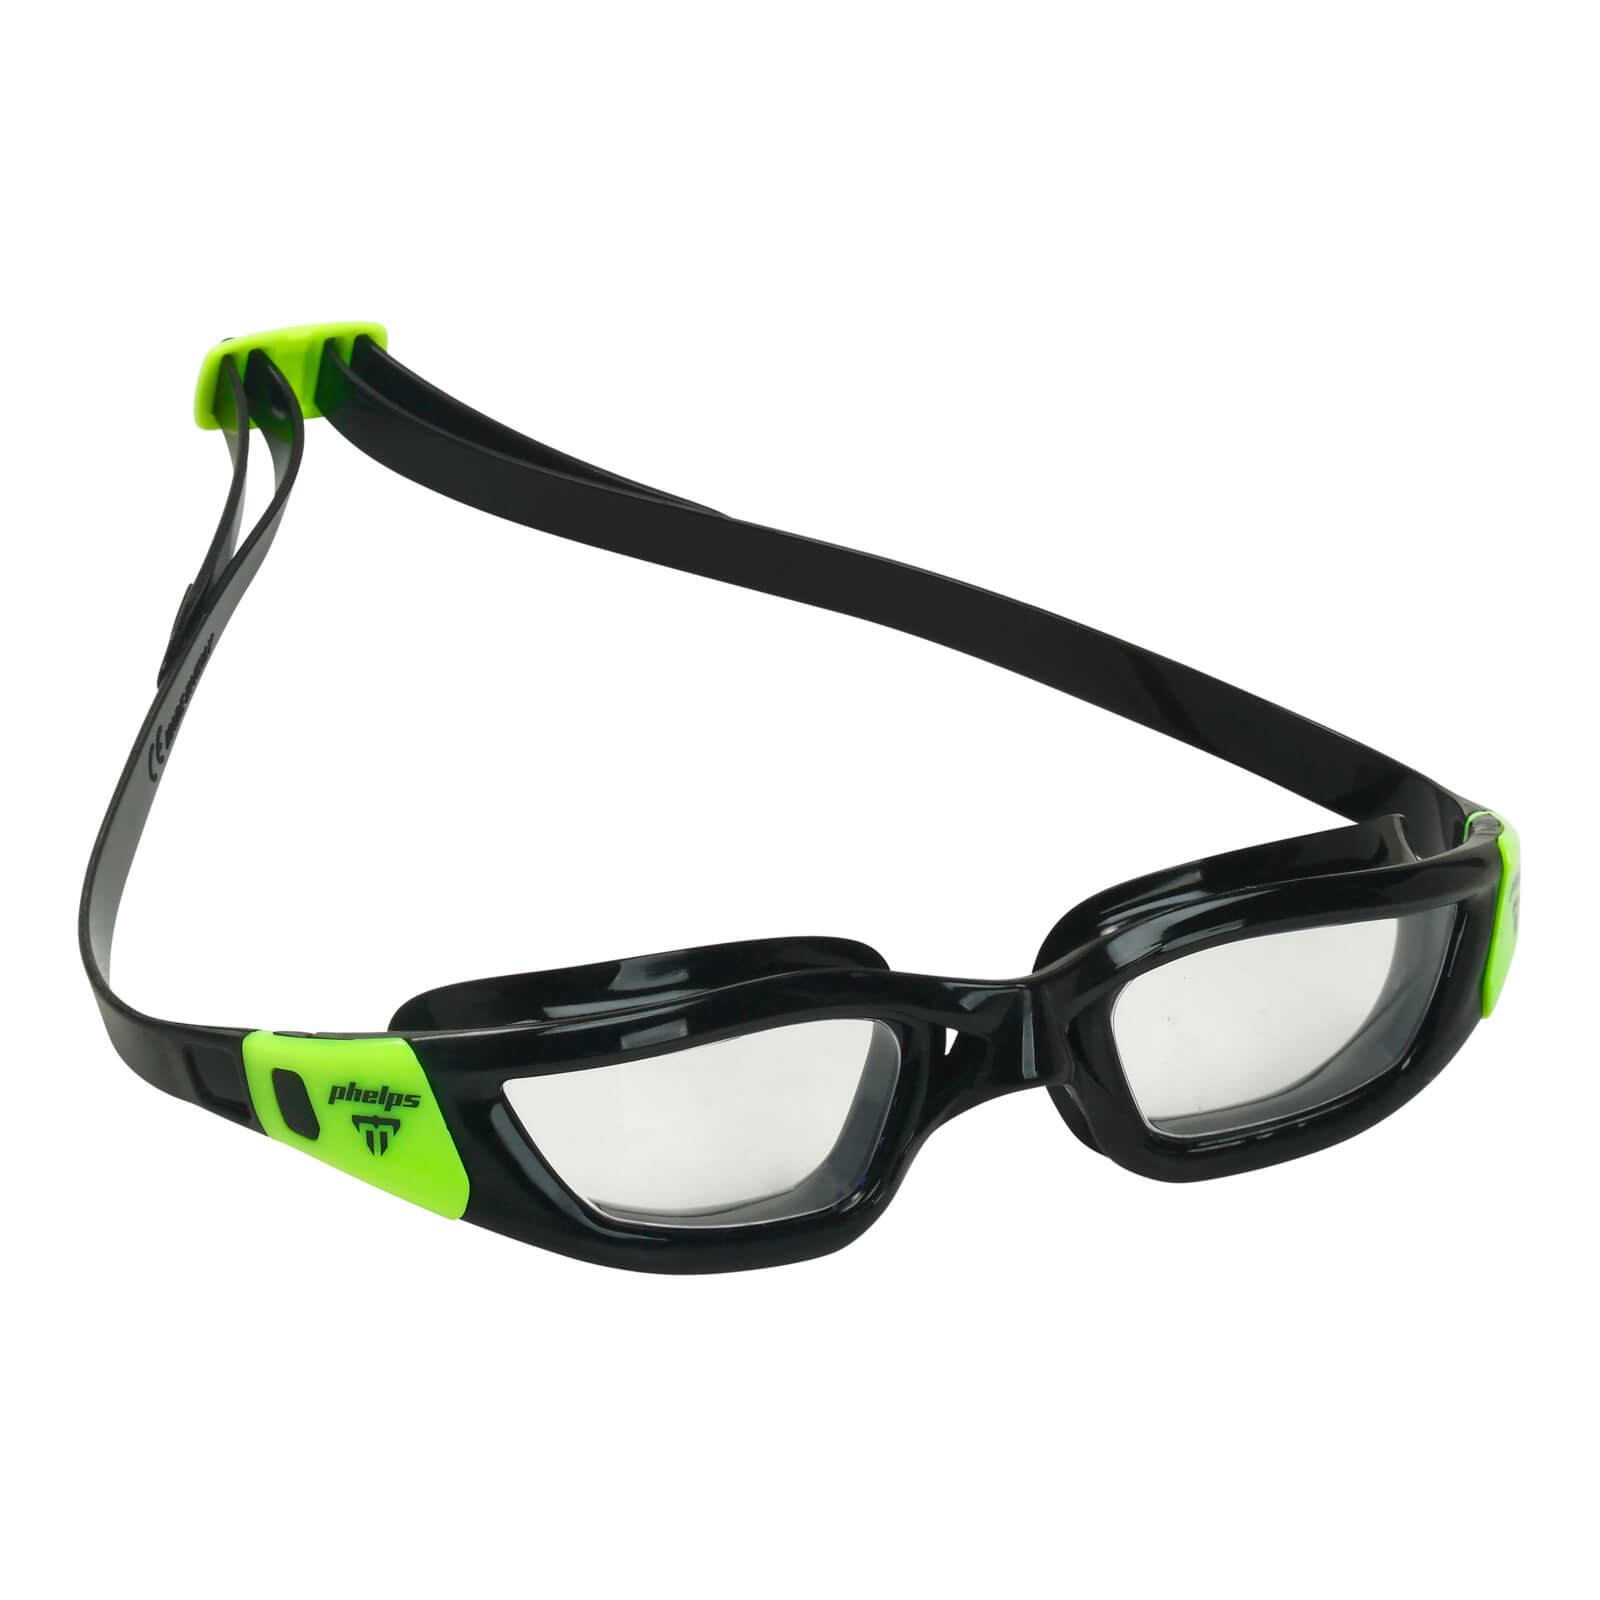 Phelps Tiburon Men's Swimming Goggles Black/Bright Green Clear